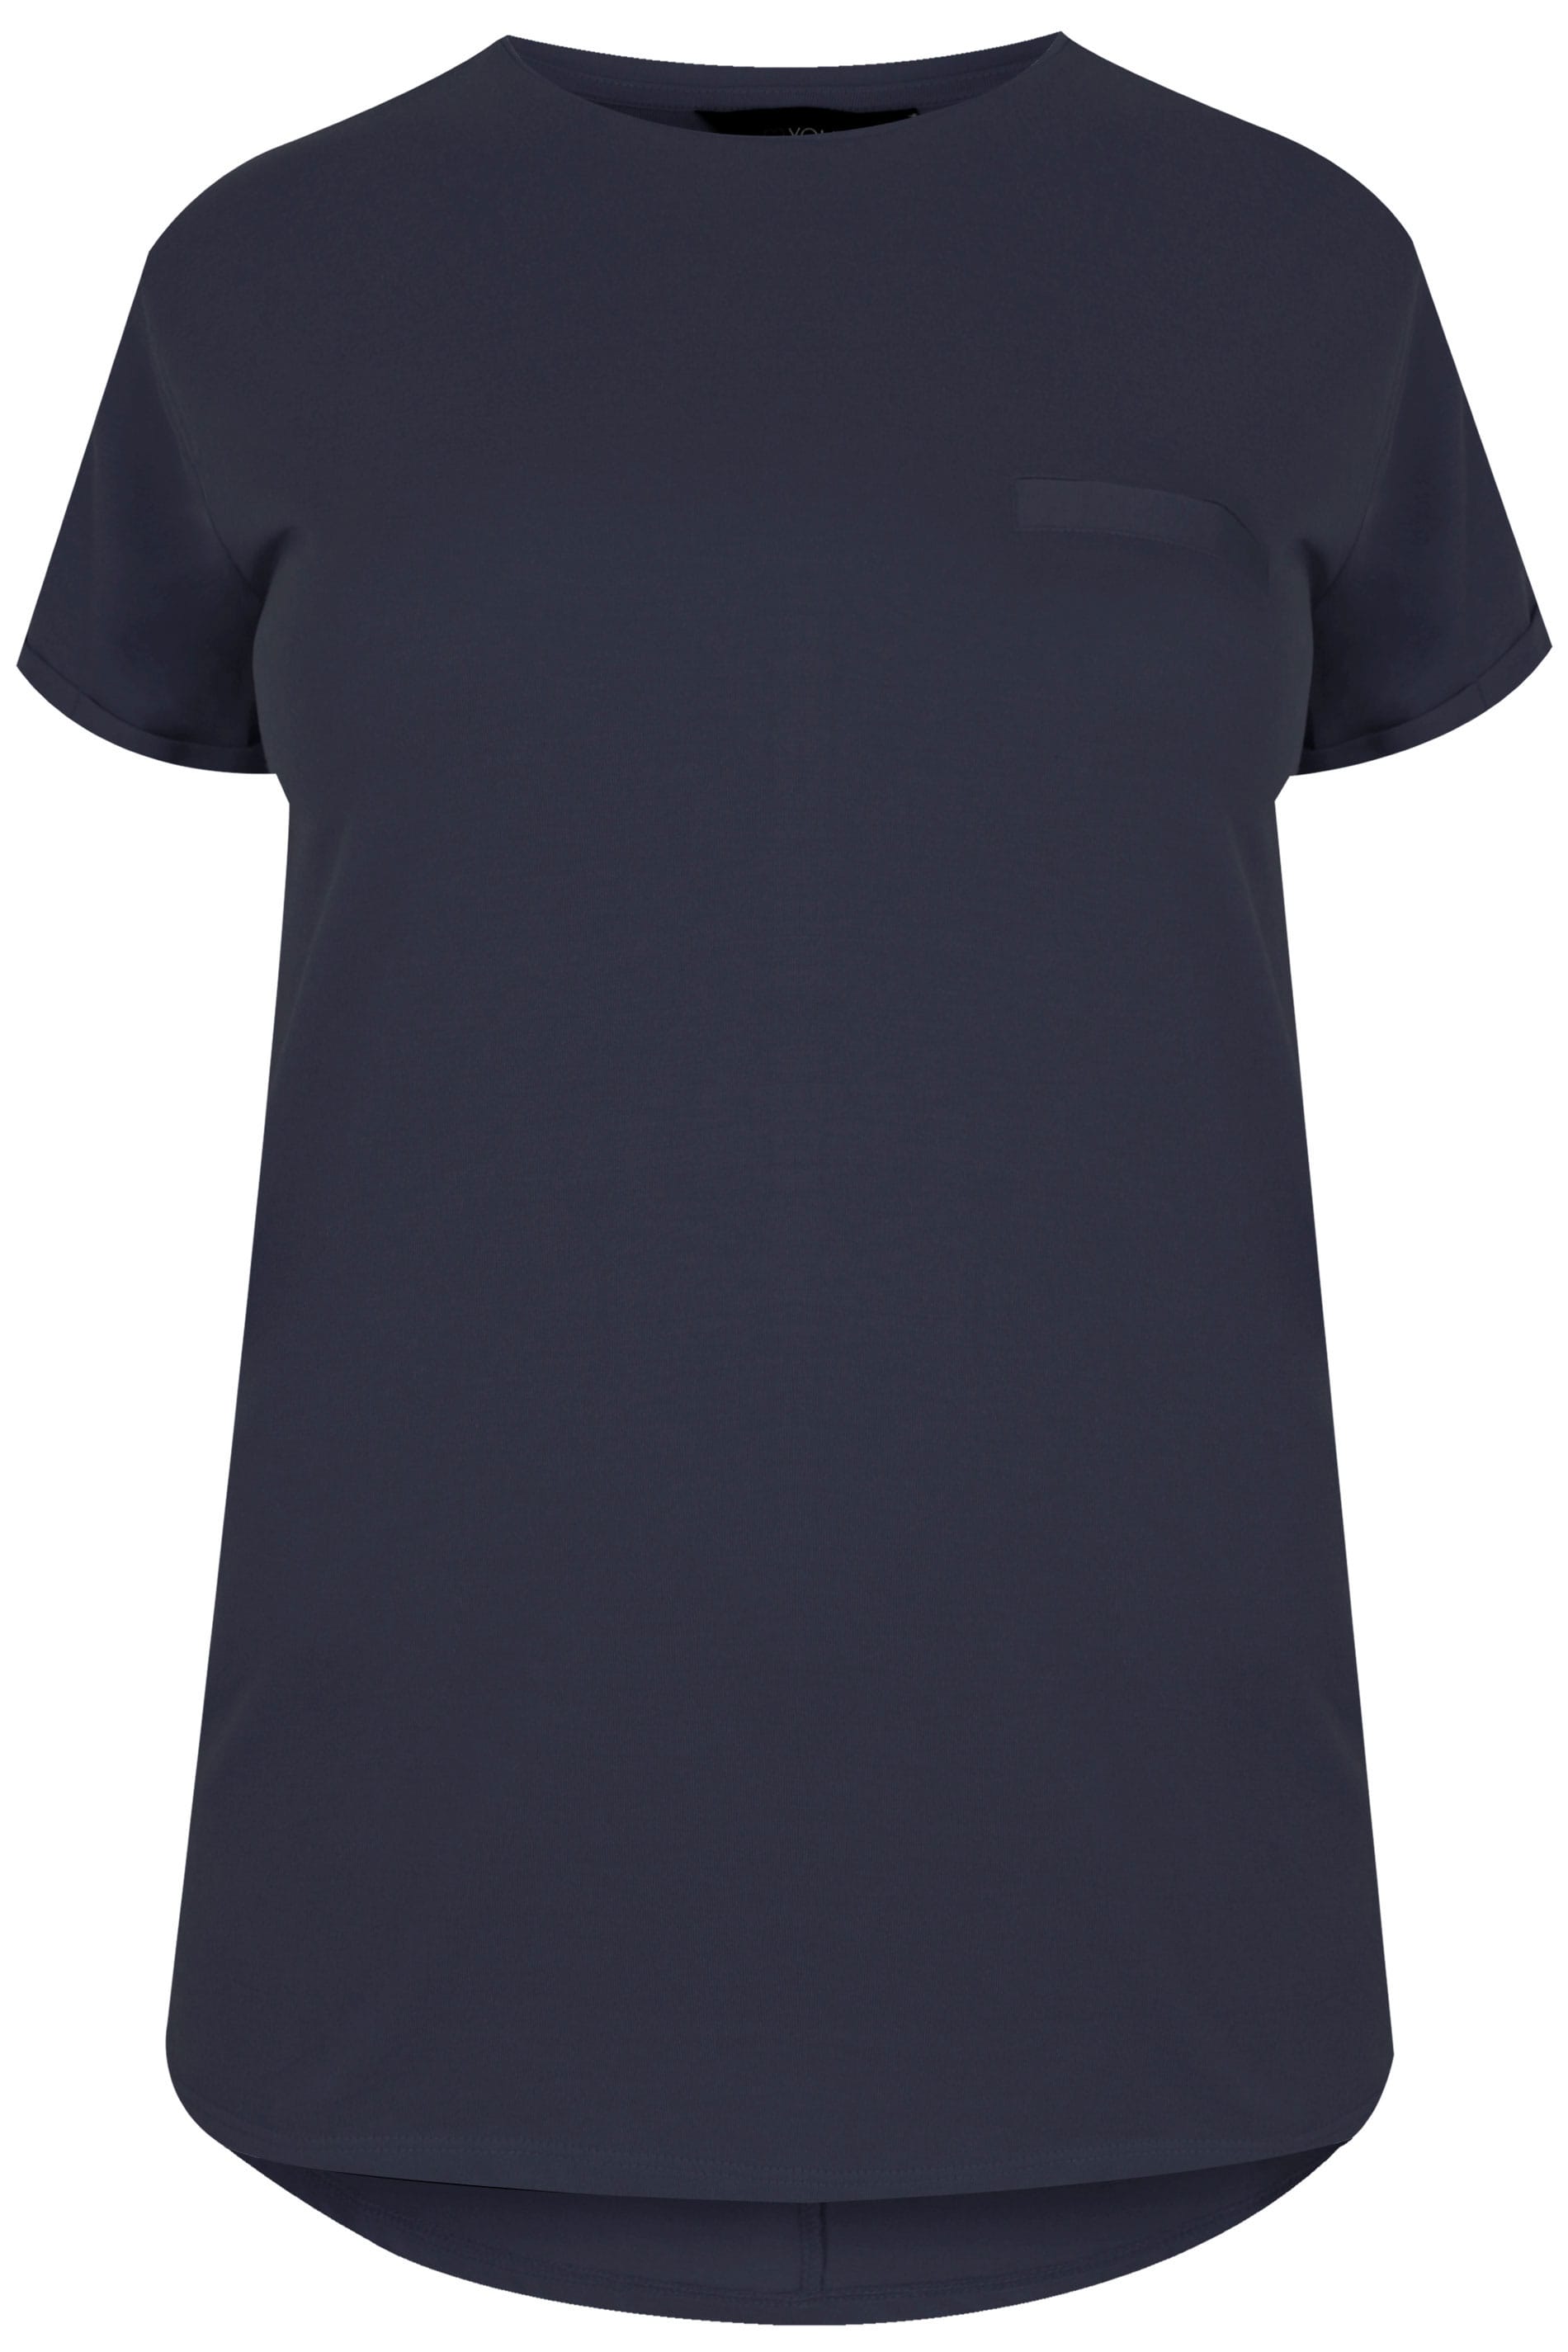 Navy Mock Pocket T-Shirt, plus size 16 to 36